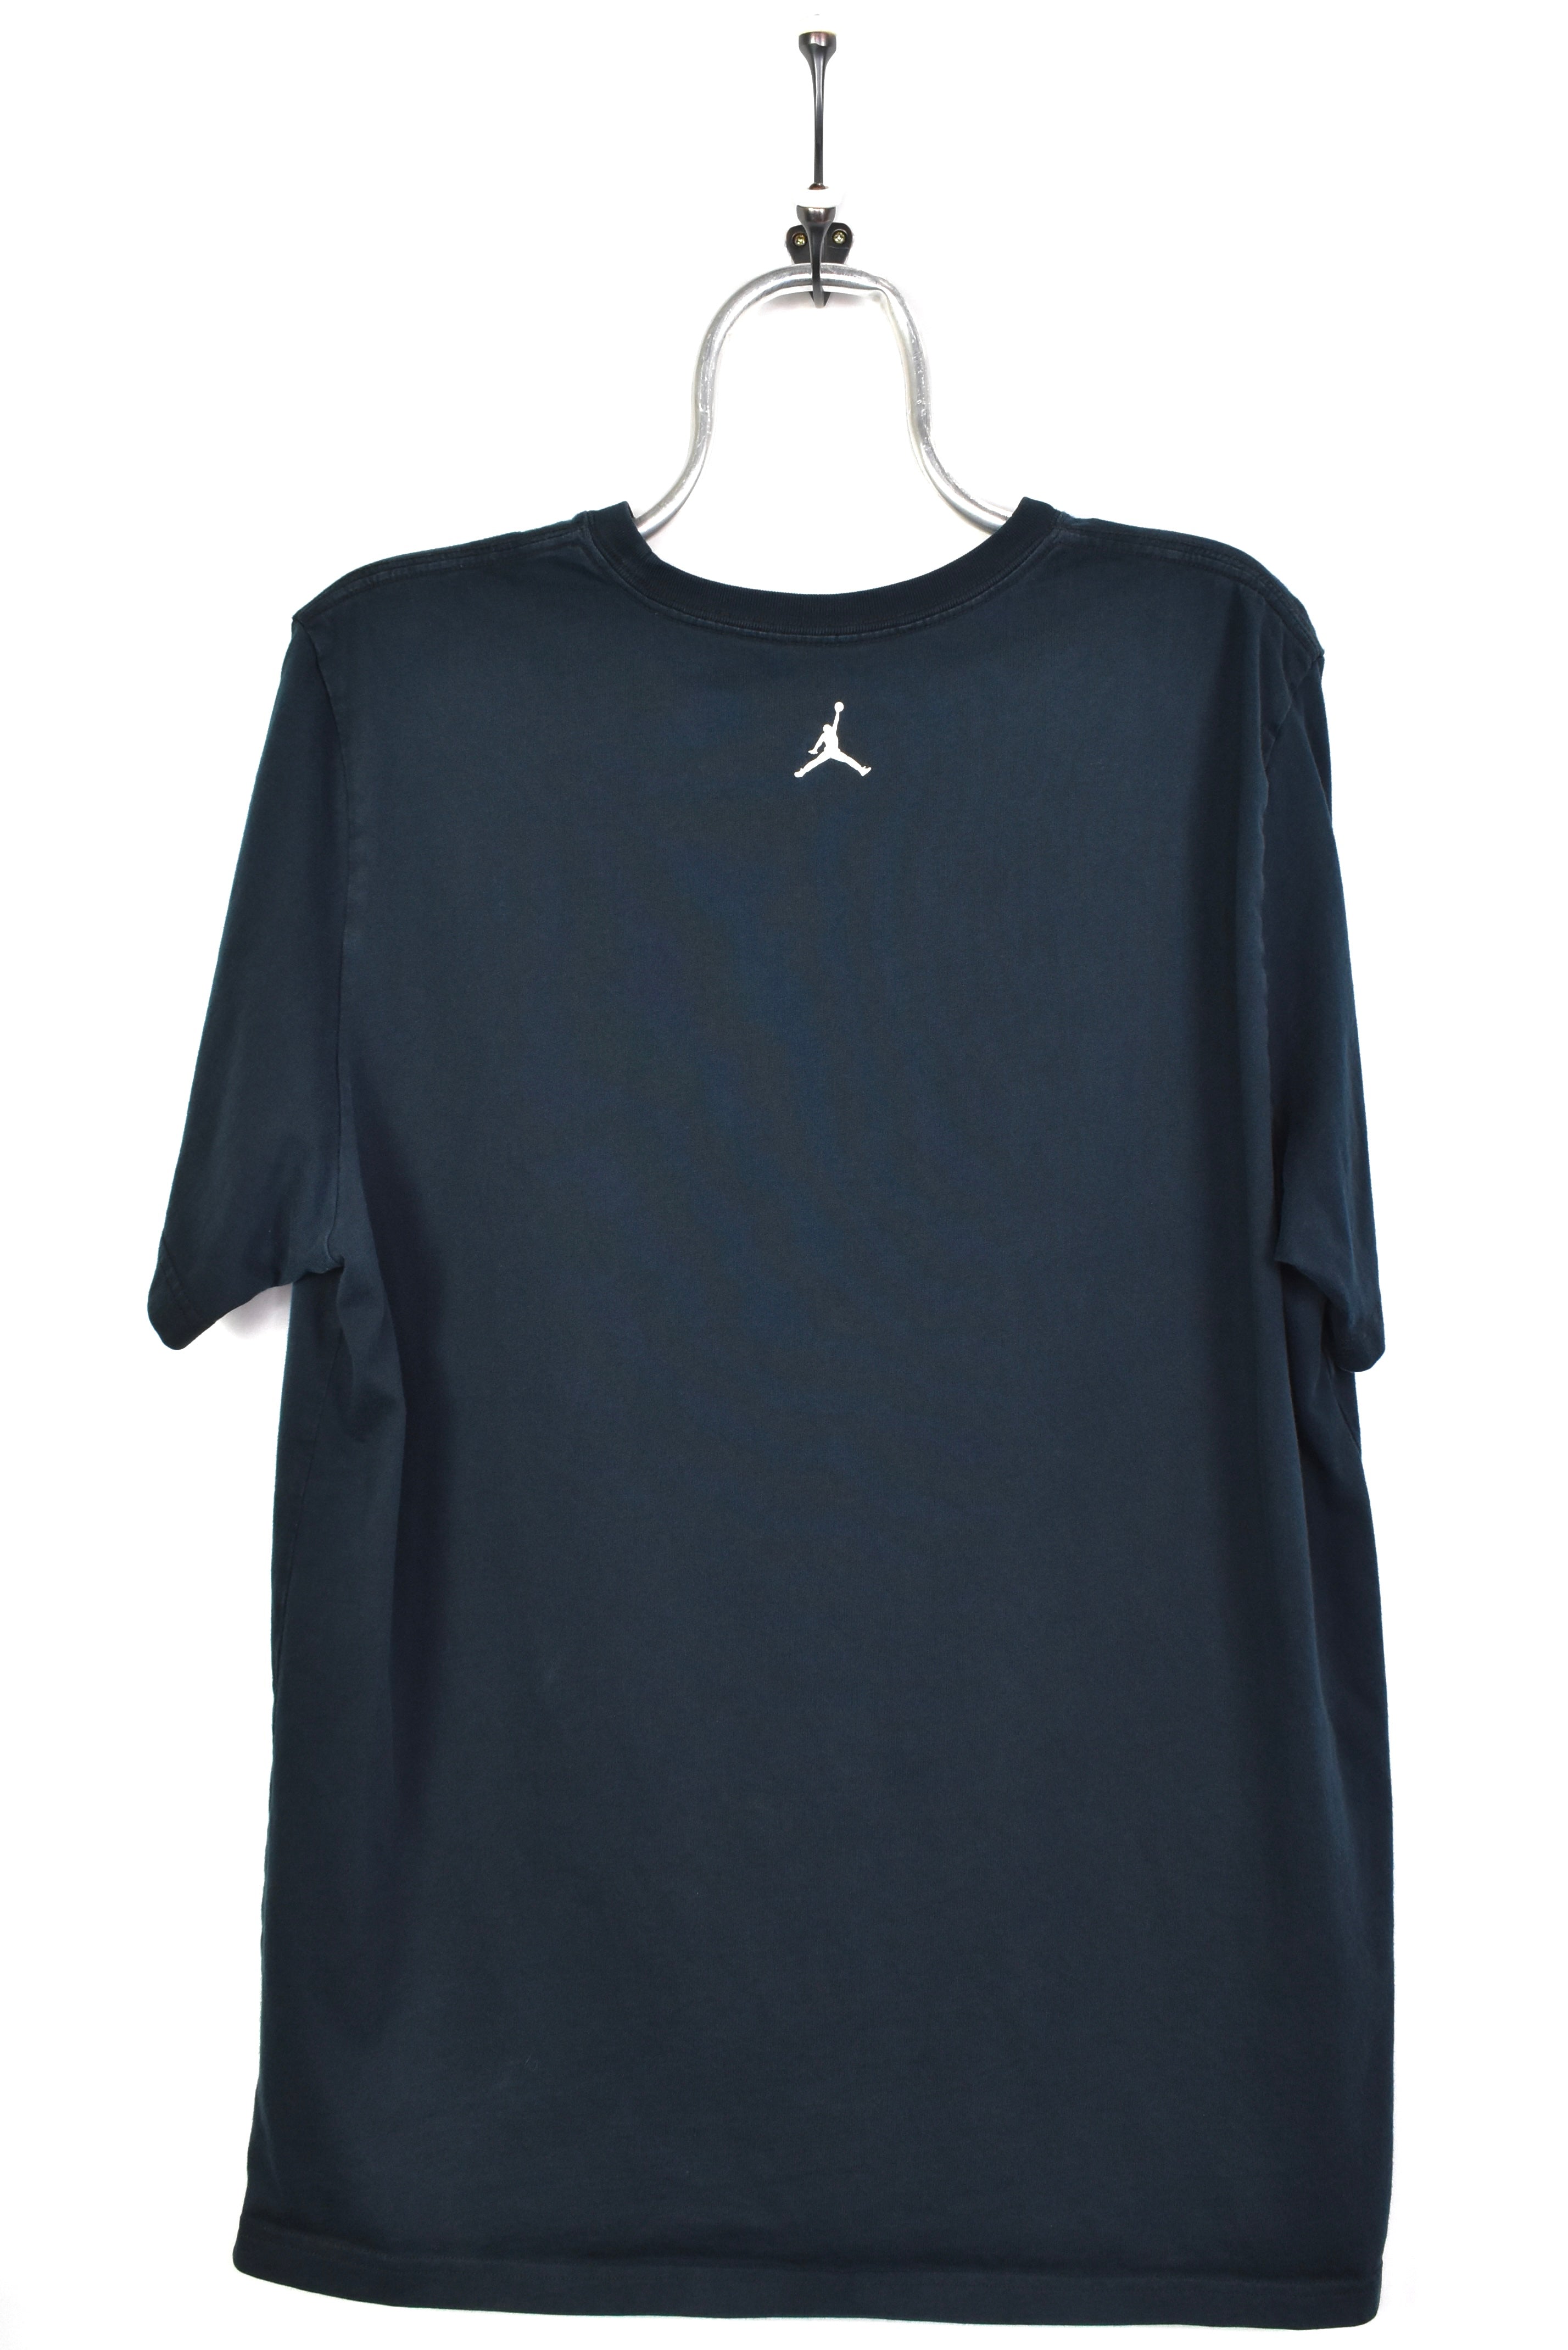 Modern Nike Air Jordan shirt - XL, black NIKE